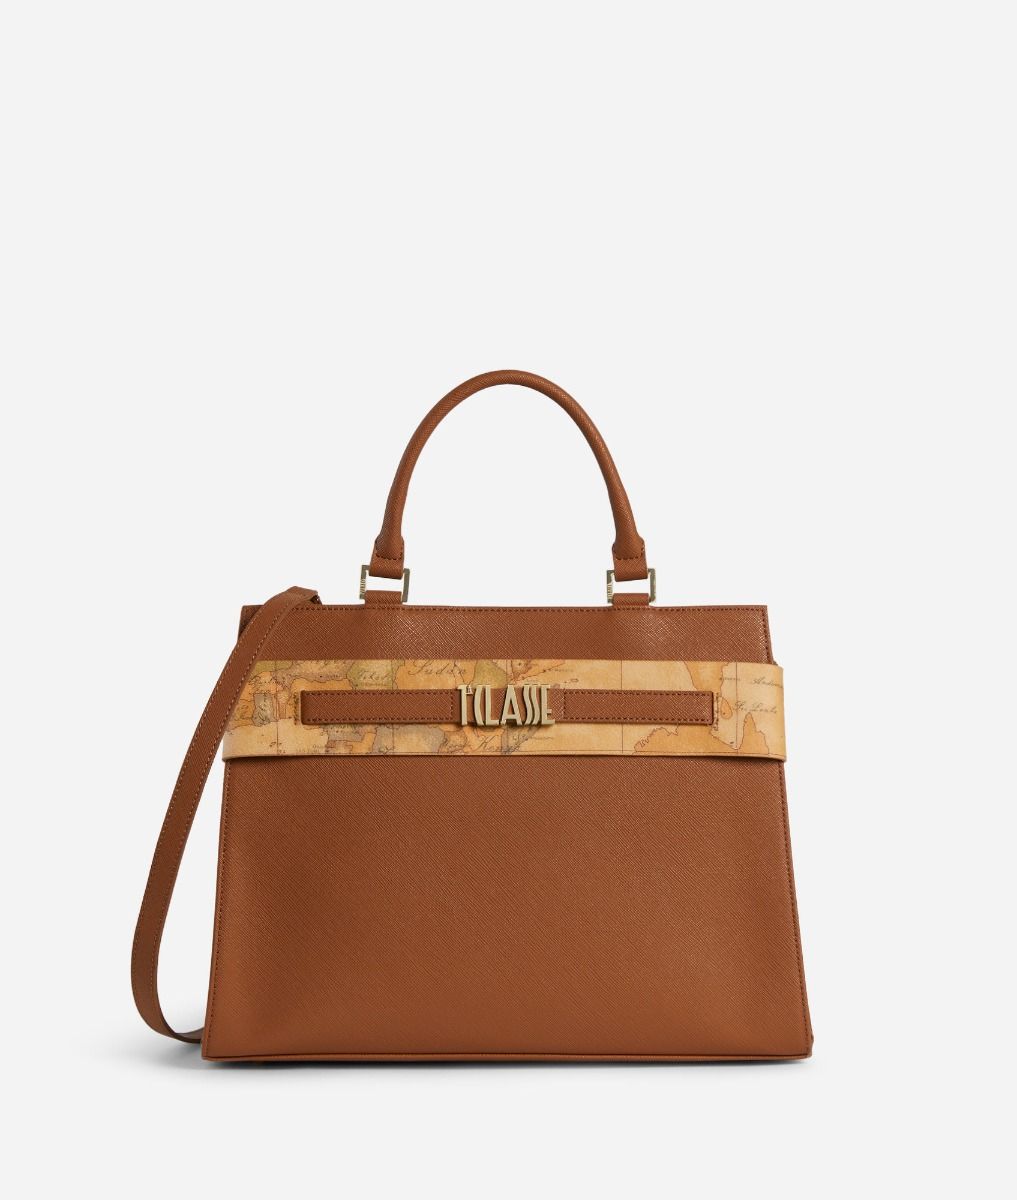 Stylish Bag Handbag in embossed saffiano Sienna color,front